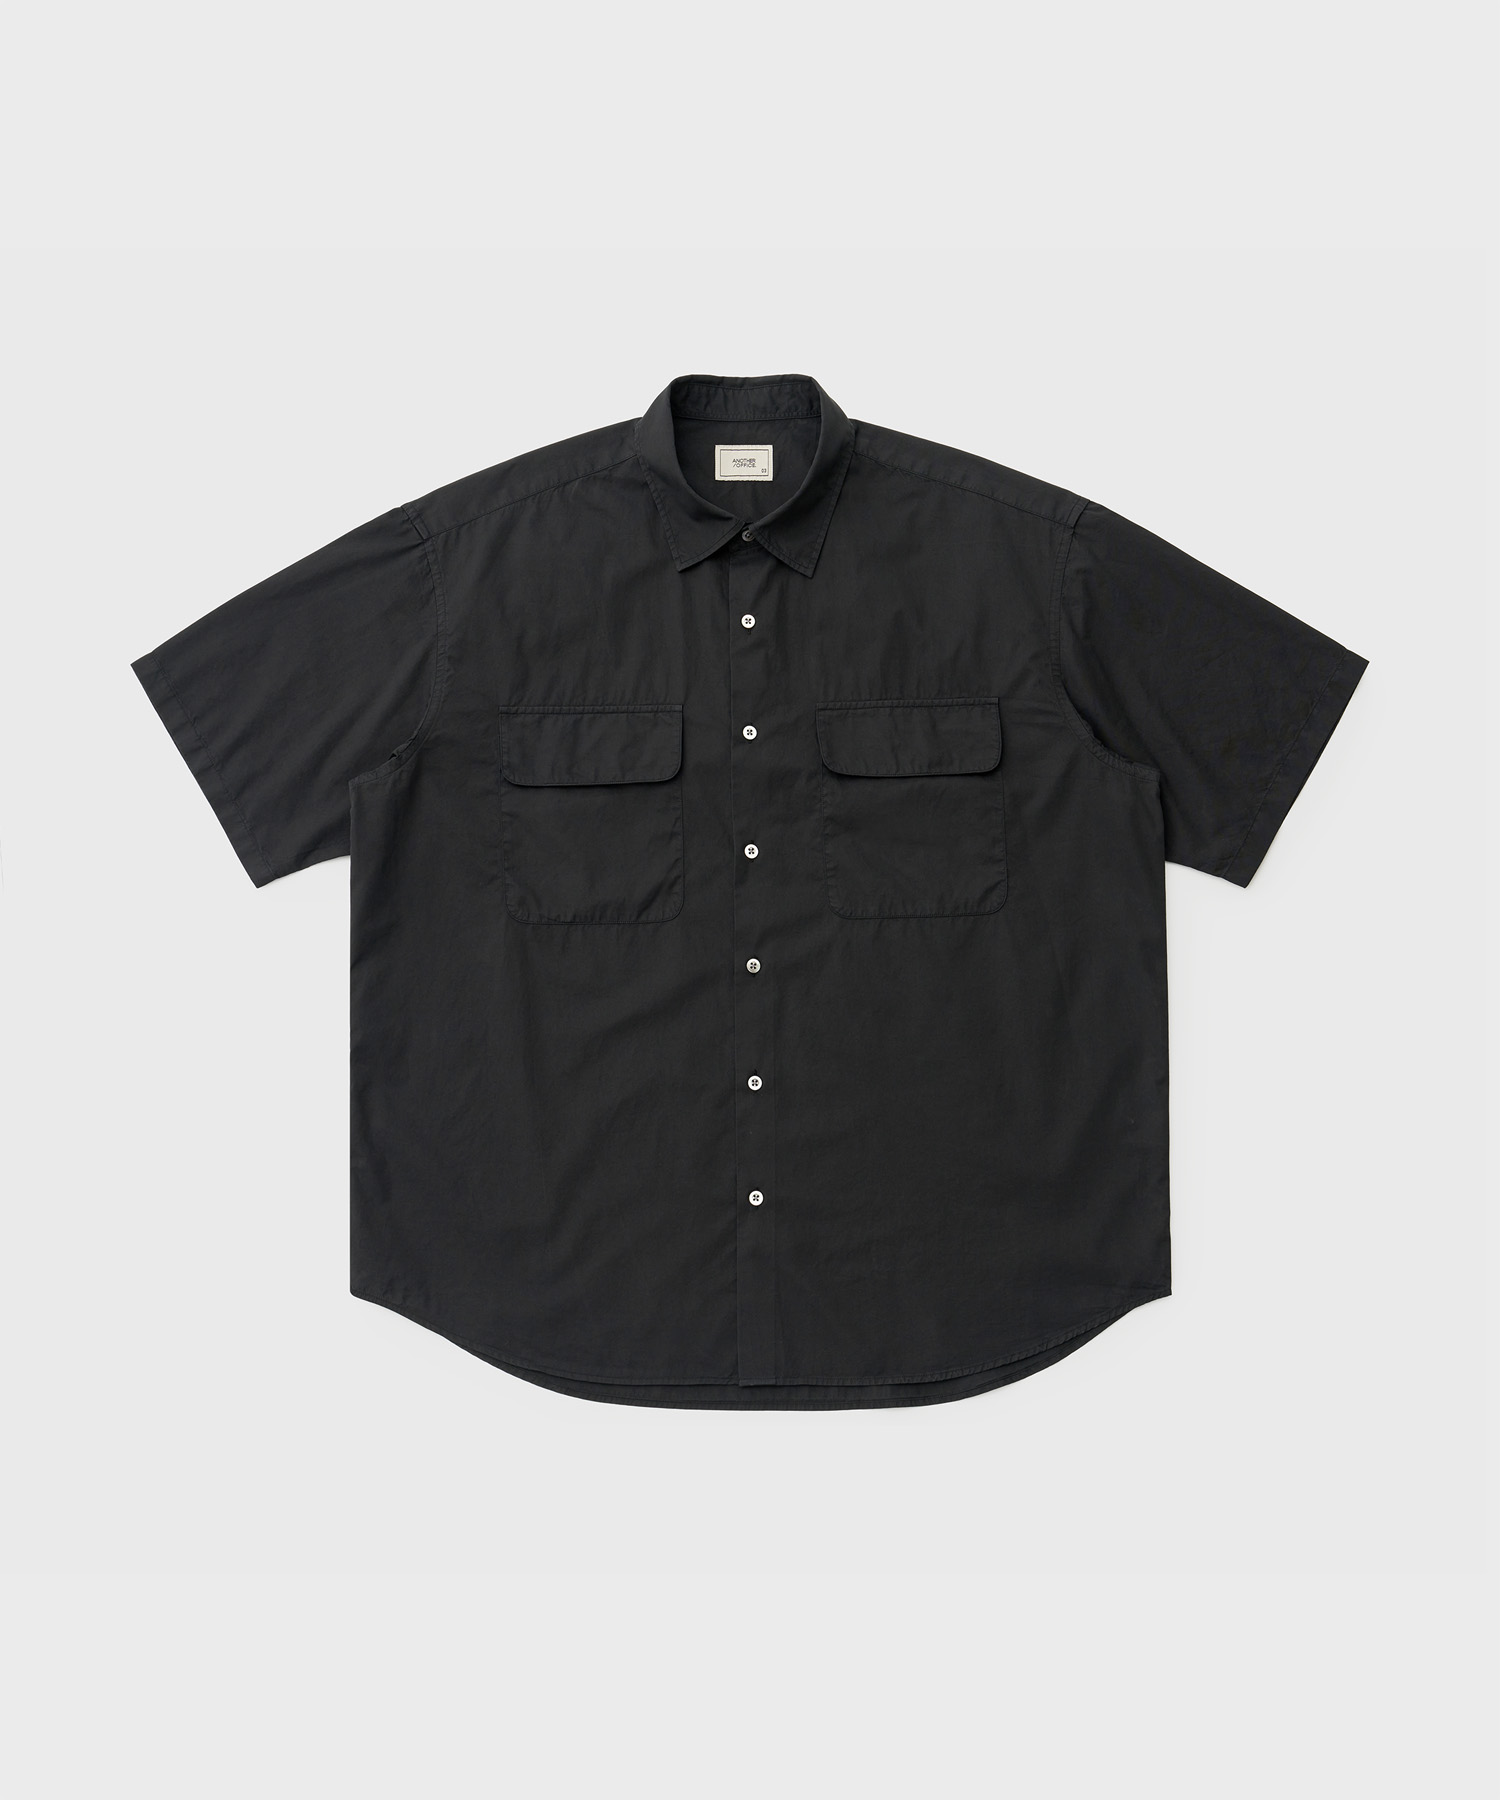 Volume Garment Shirt (Almost Black)